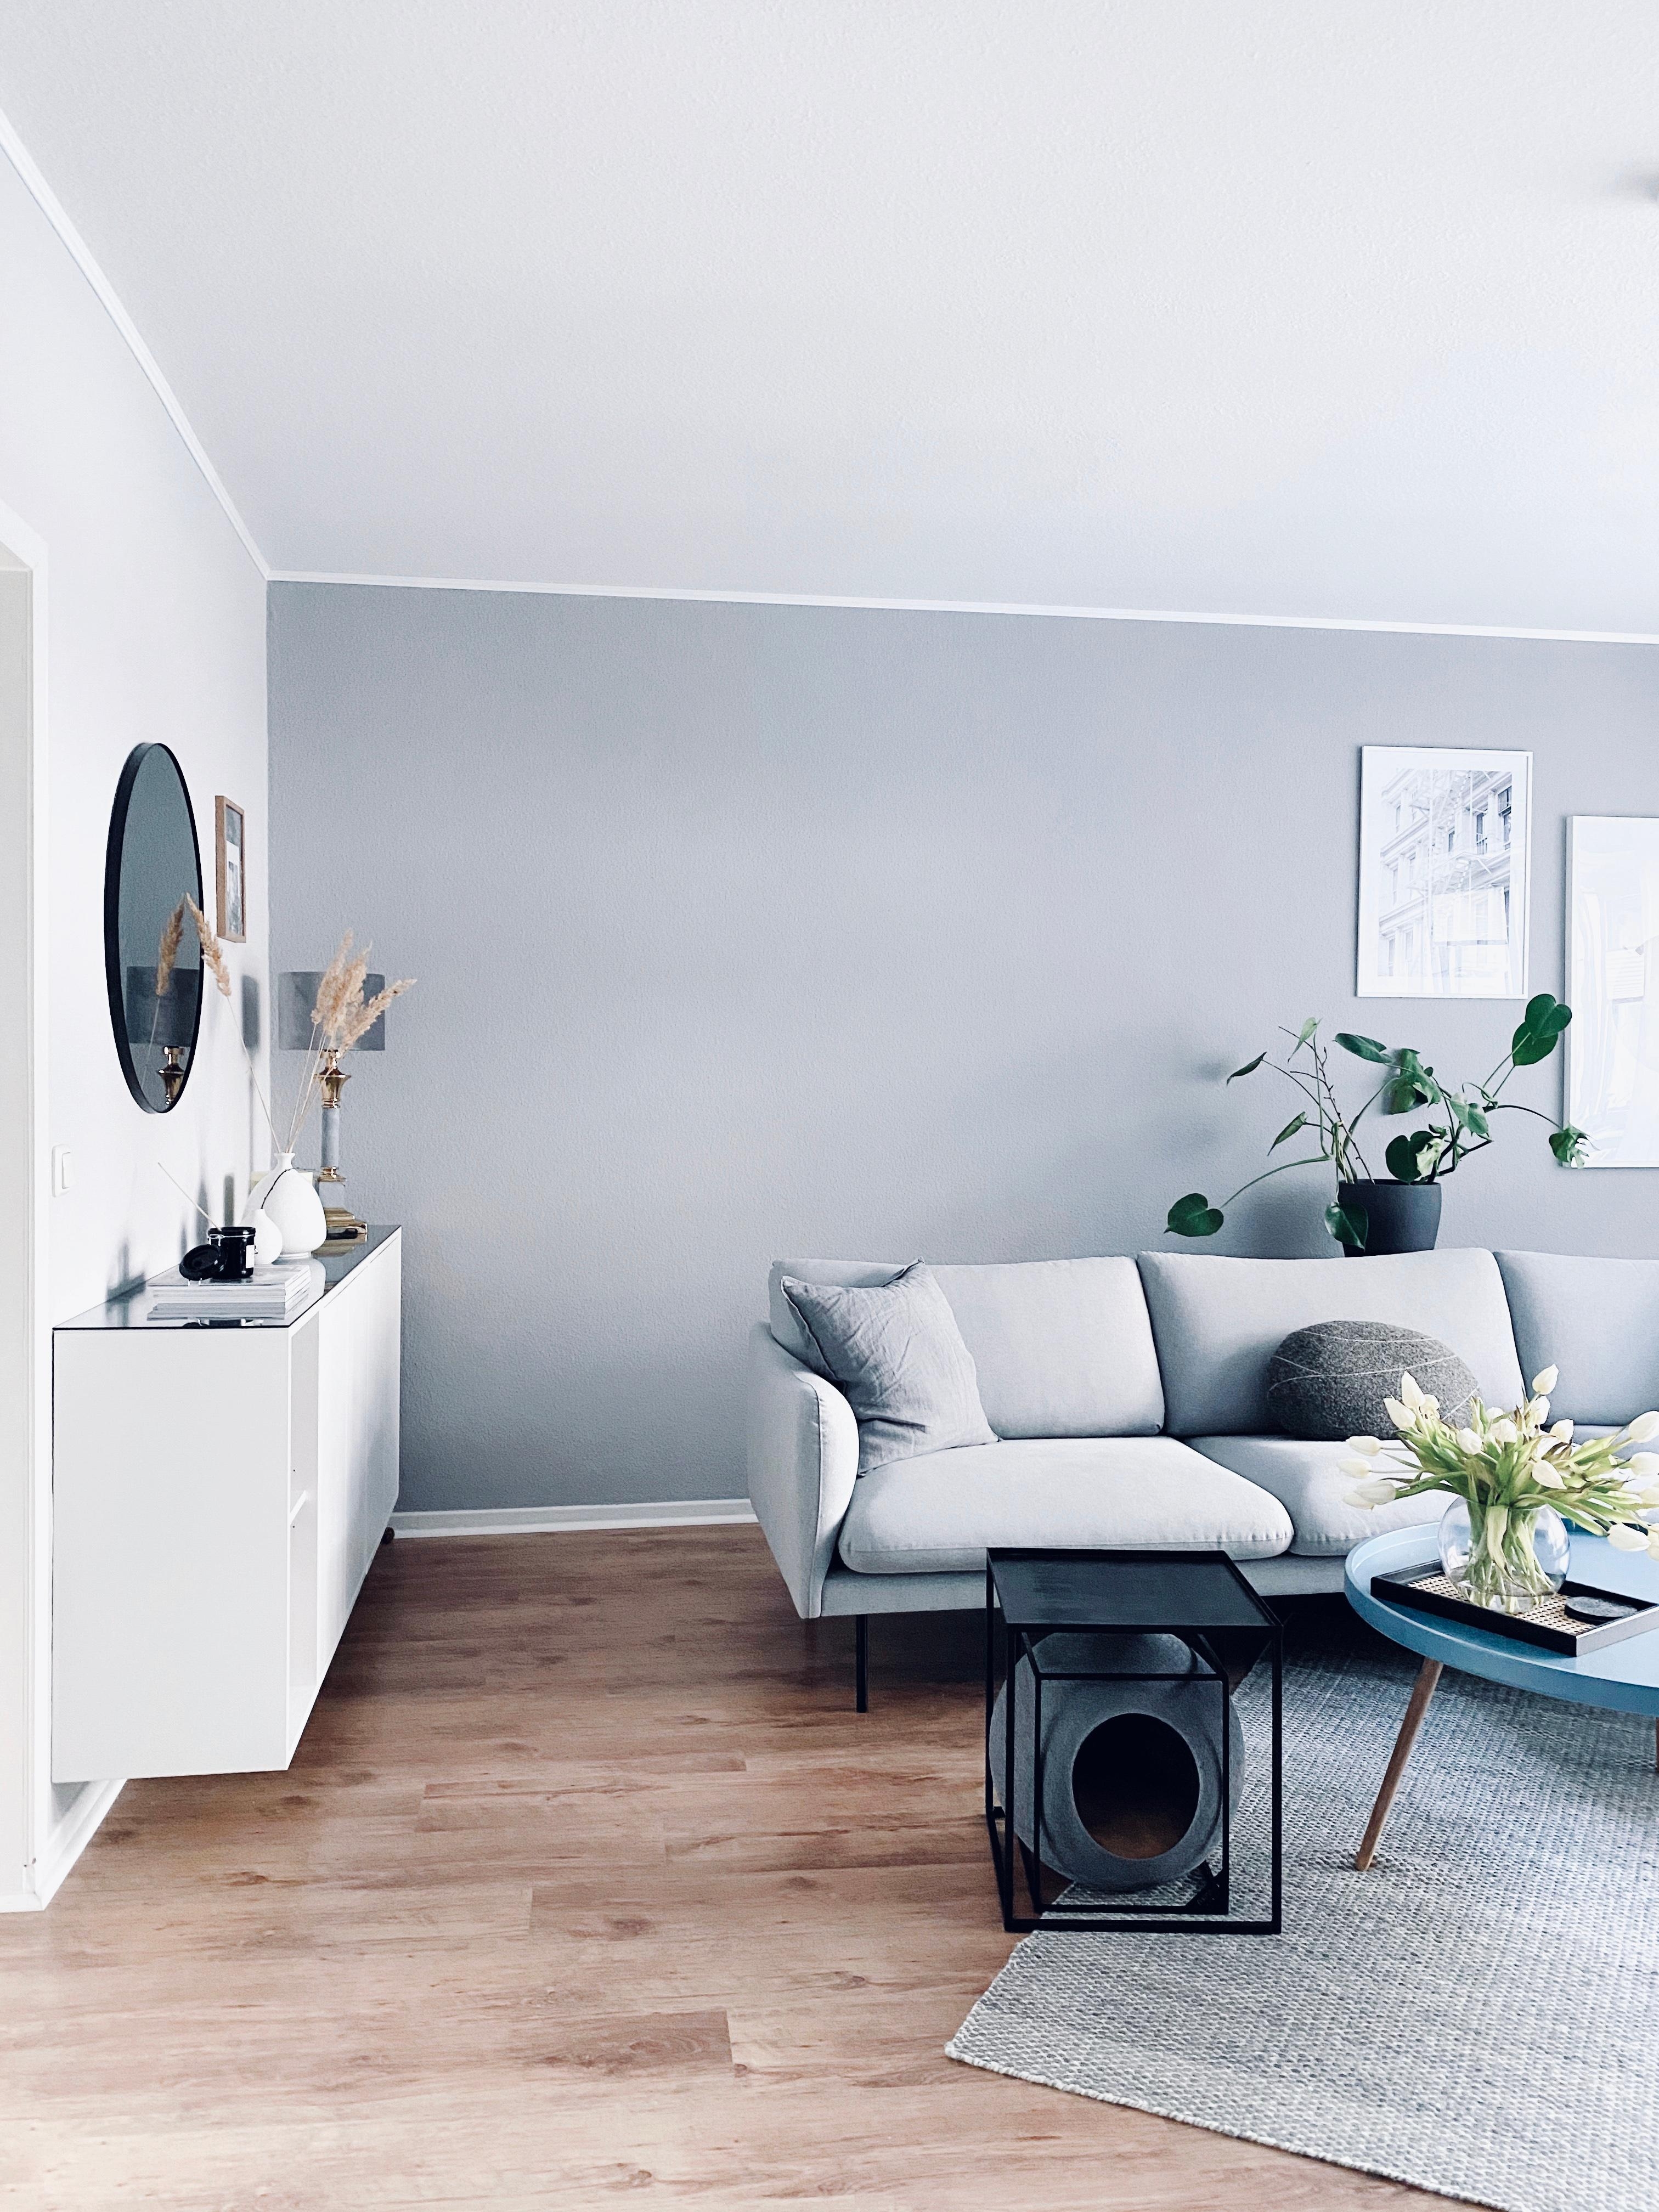 Wintermodus ❄️
#greymood #interior #mynordicroom #scandinavianliving #hygge #monochrome #minimalism #livingroom